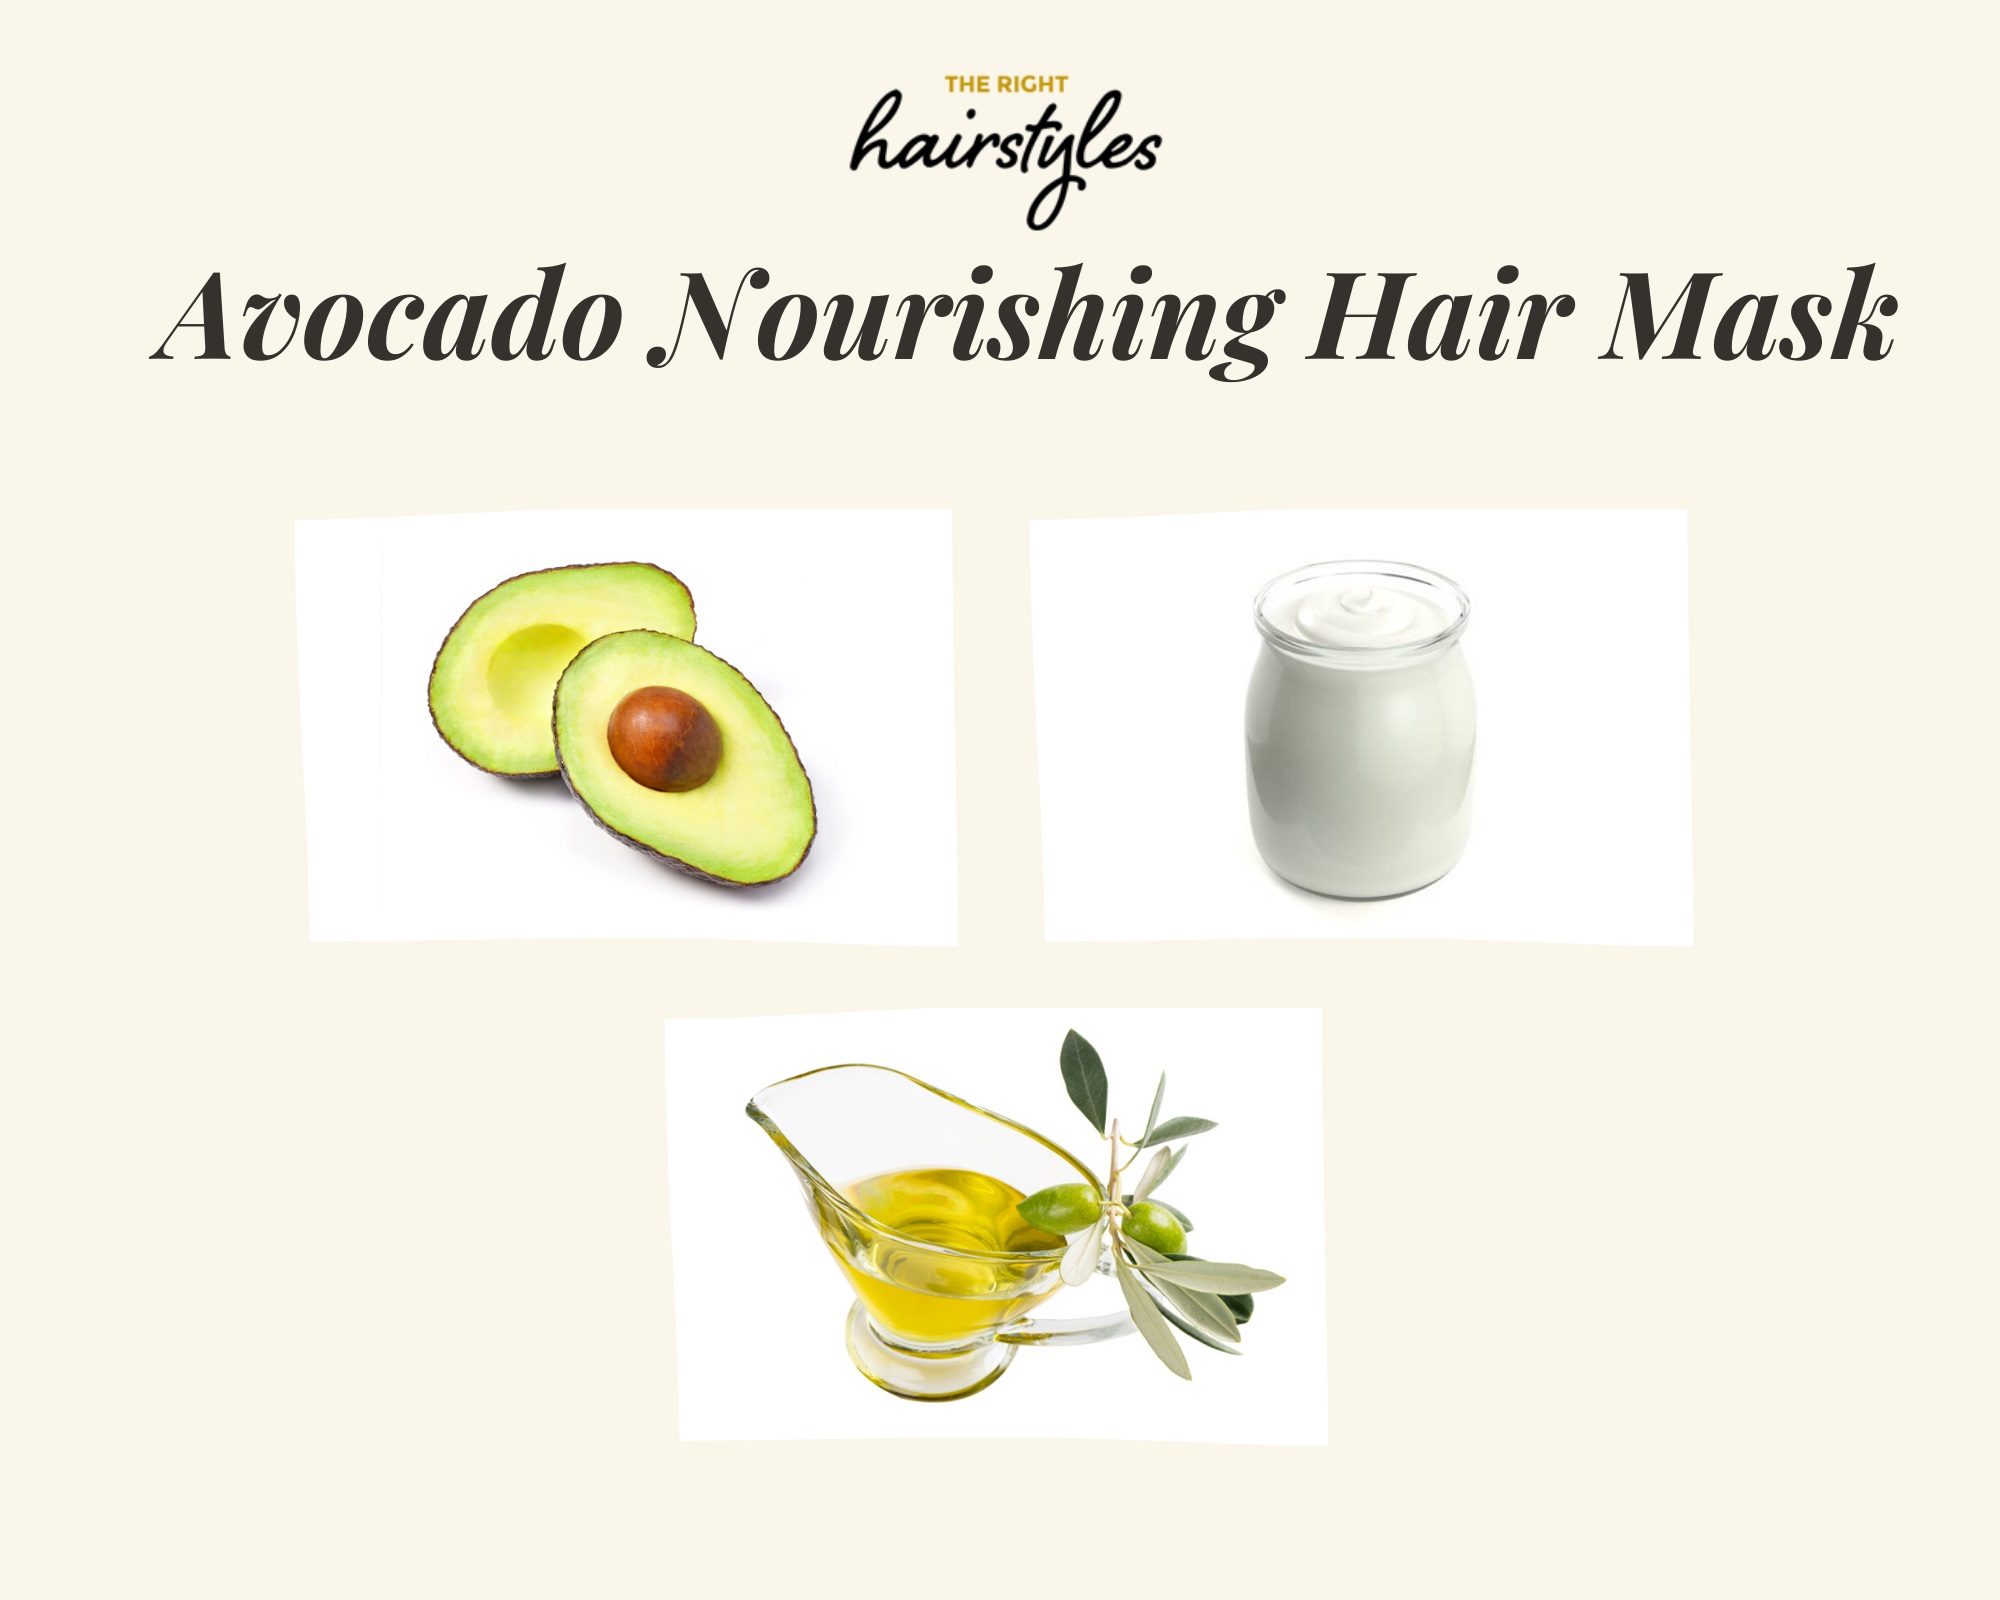 Avocado Nourishing Hair Mask